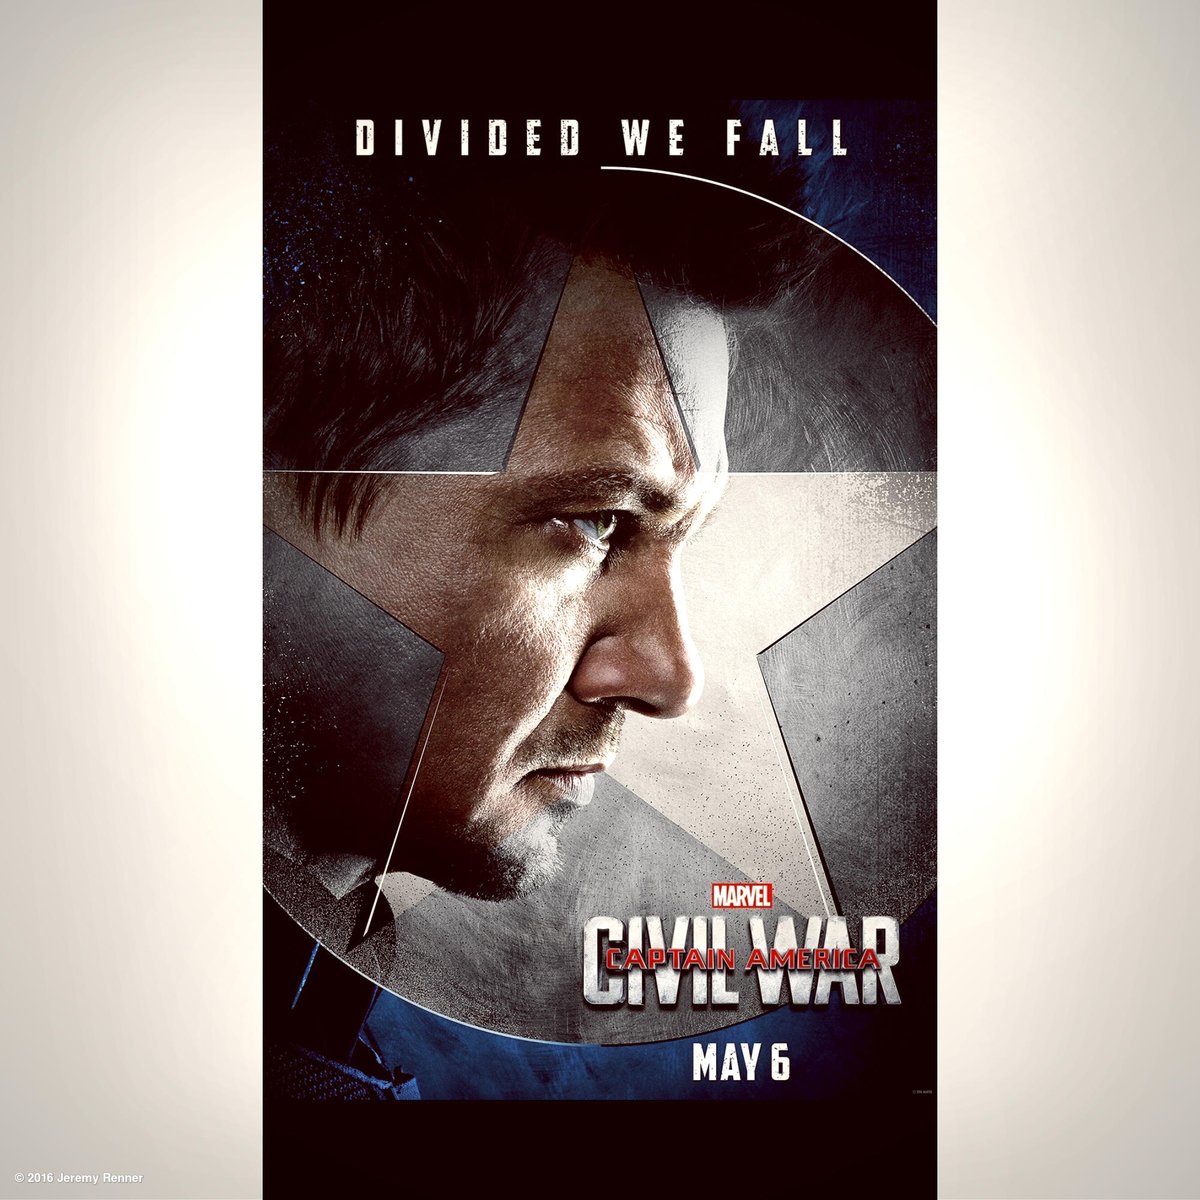 Go #teamcap New character posters !!  #marvel #civilwar #hawkeye #captainamerica https://t.co/Zb42mfzvAy